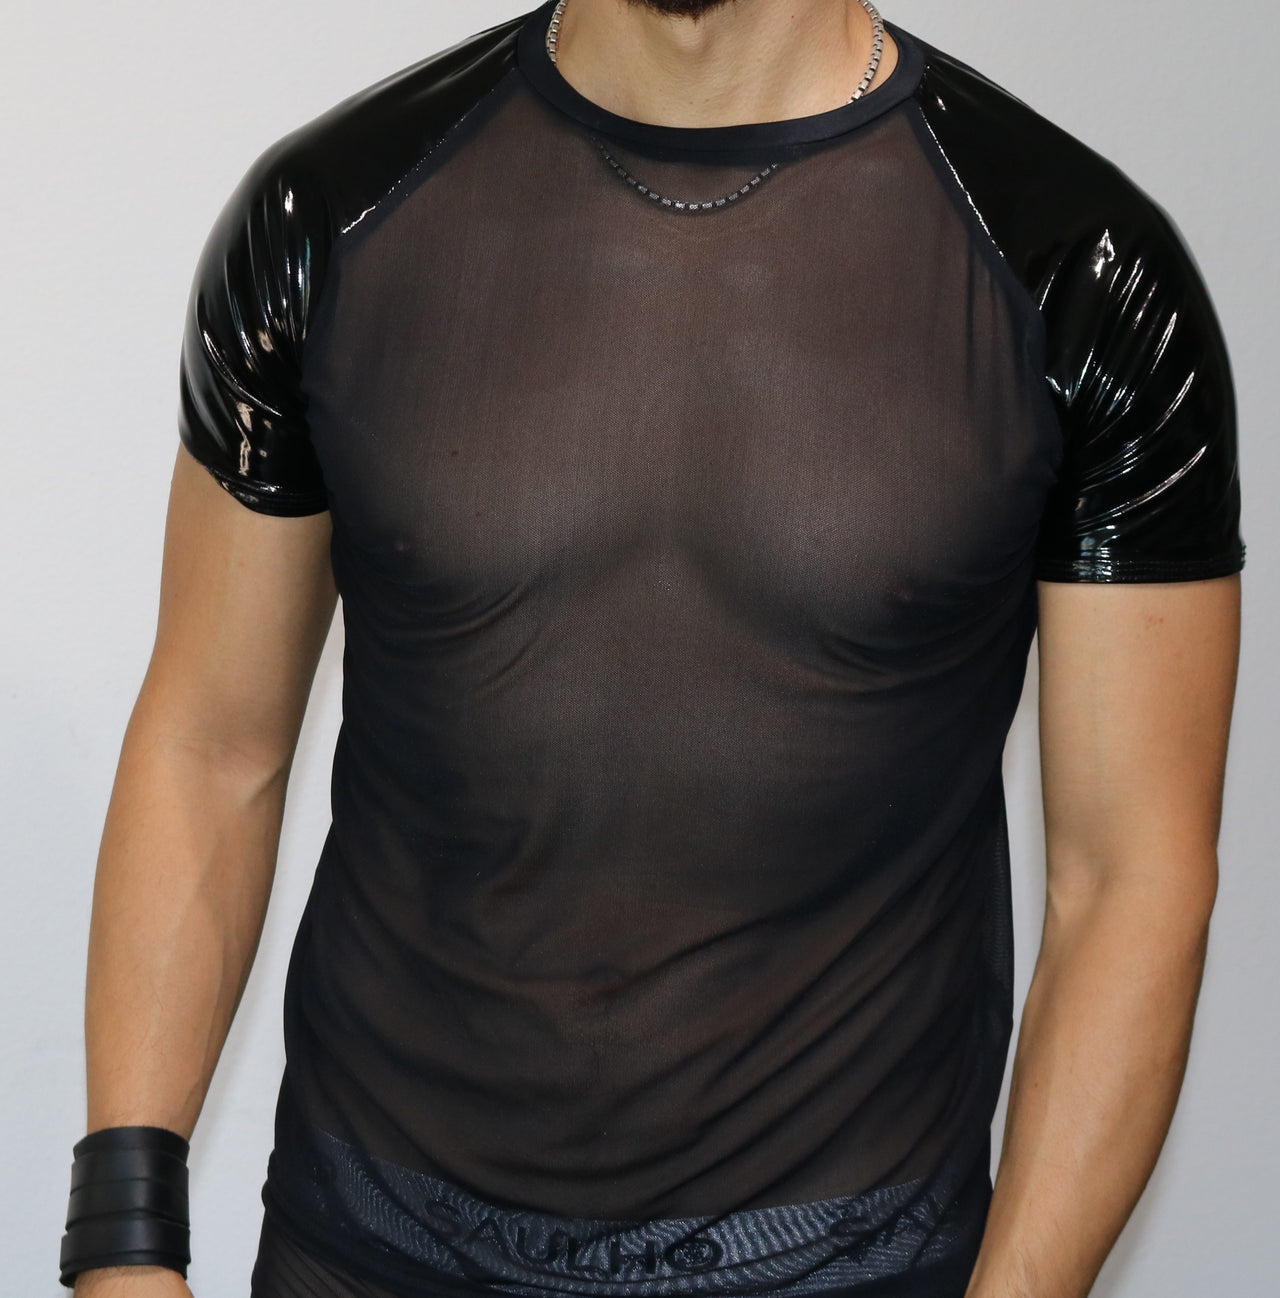 Saulho Sexy Black Faux Latex, Mesh Short Sleeve T-Shirt